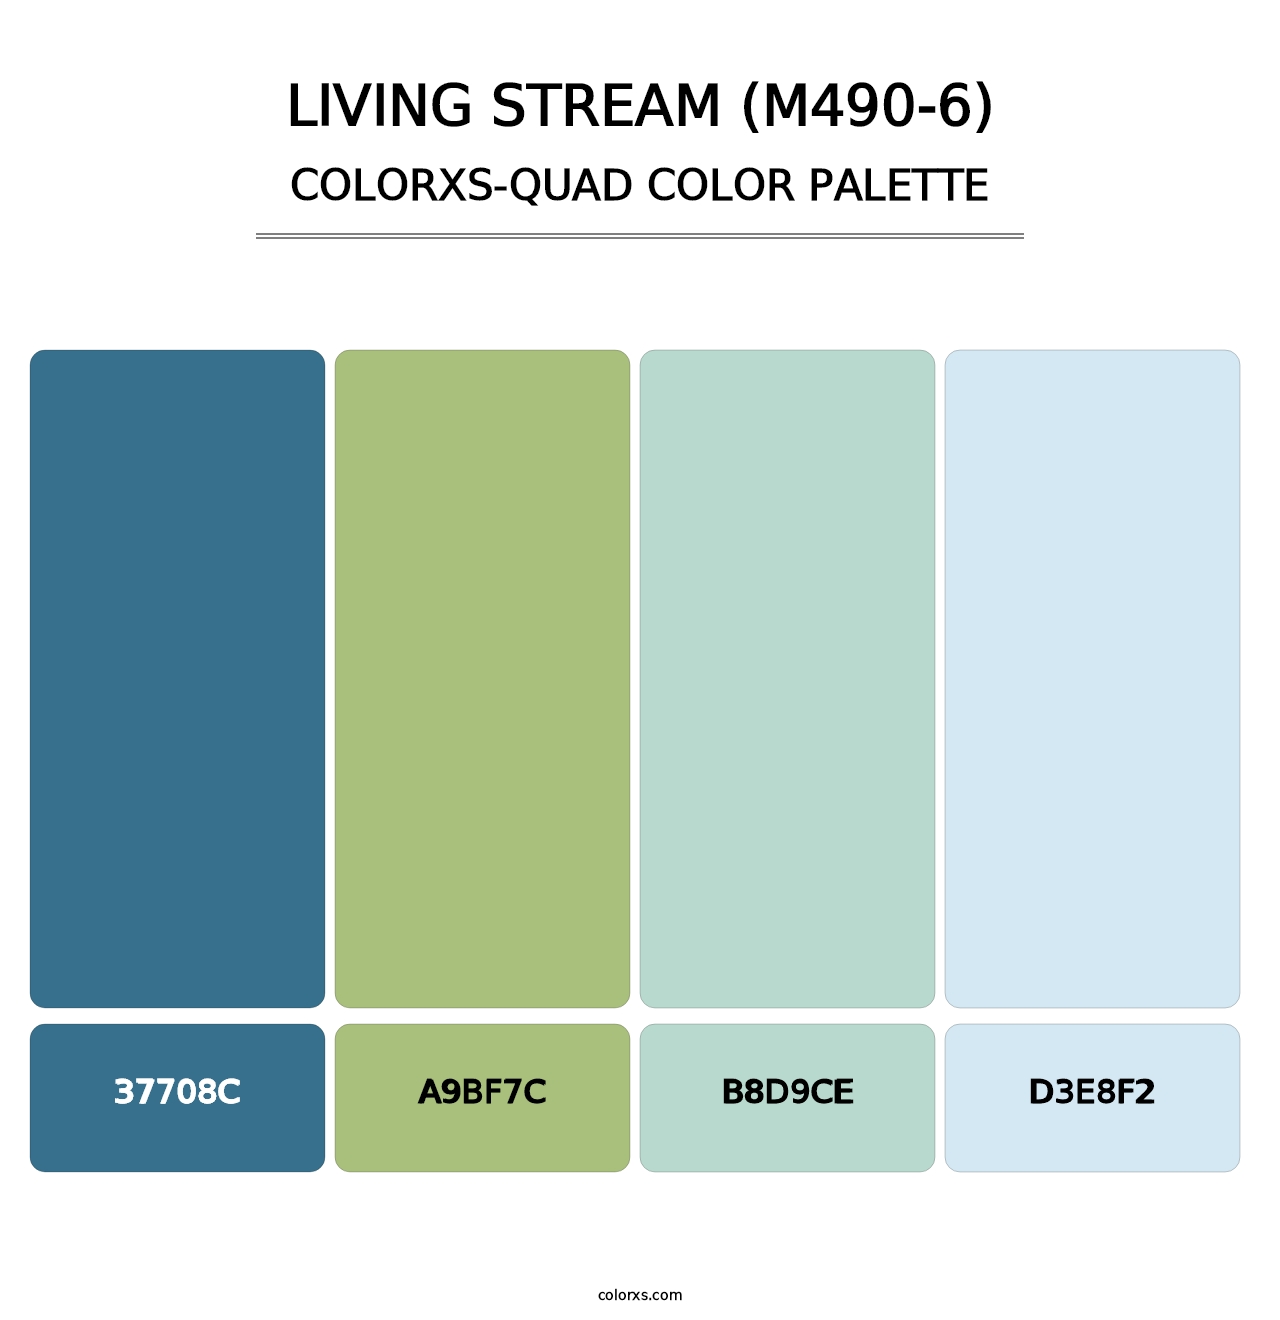 Living Stream (M490-6) - Colorxs Quad Palette